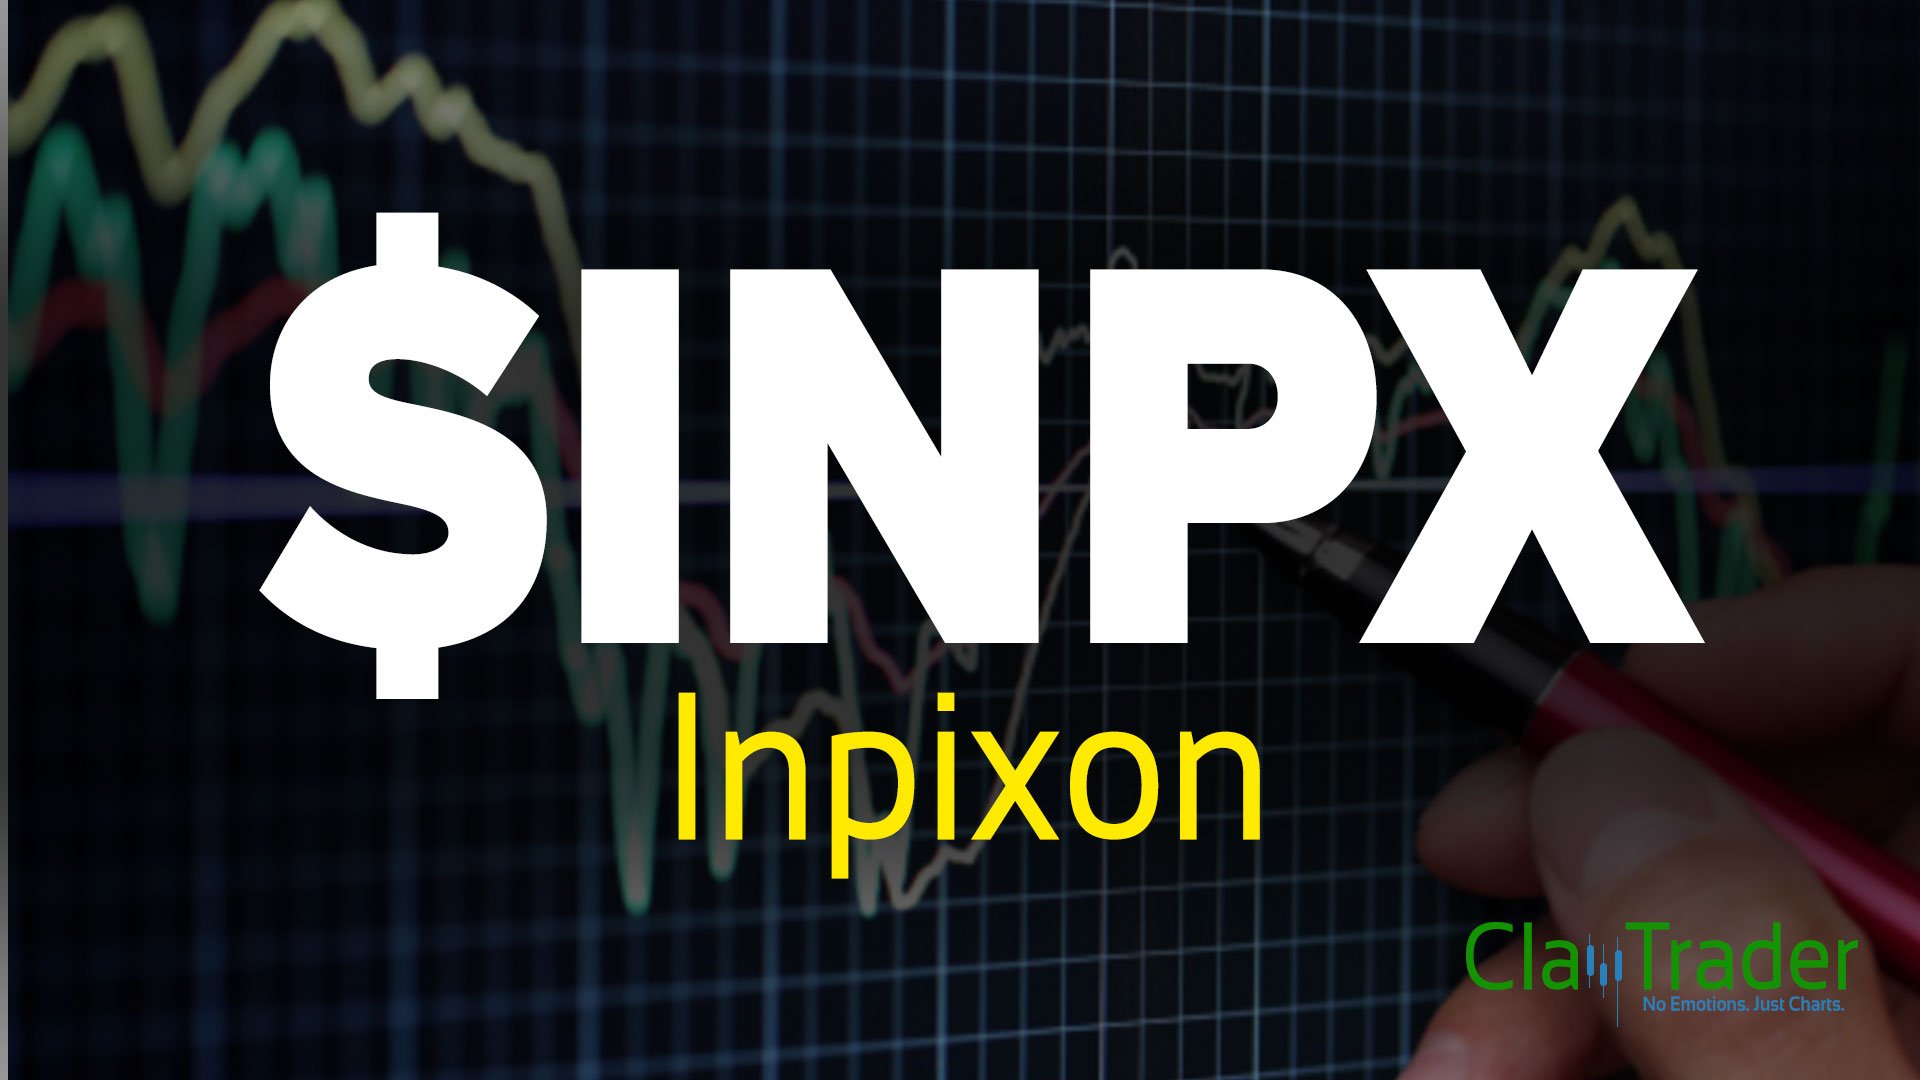 Inpx stock